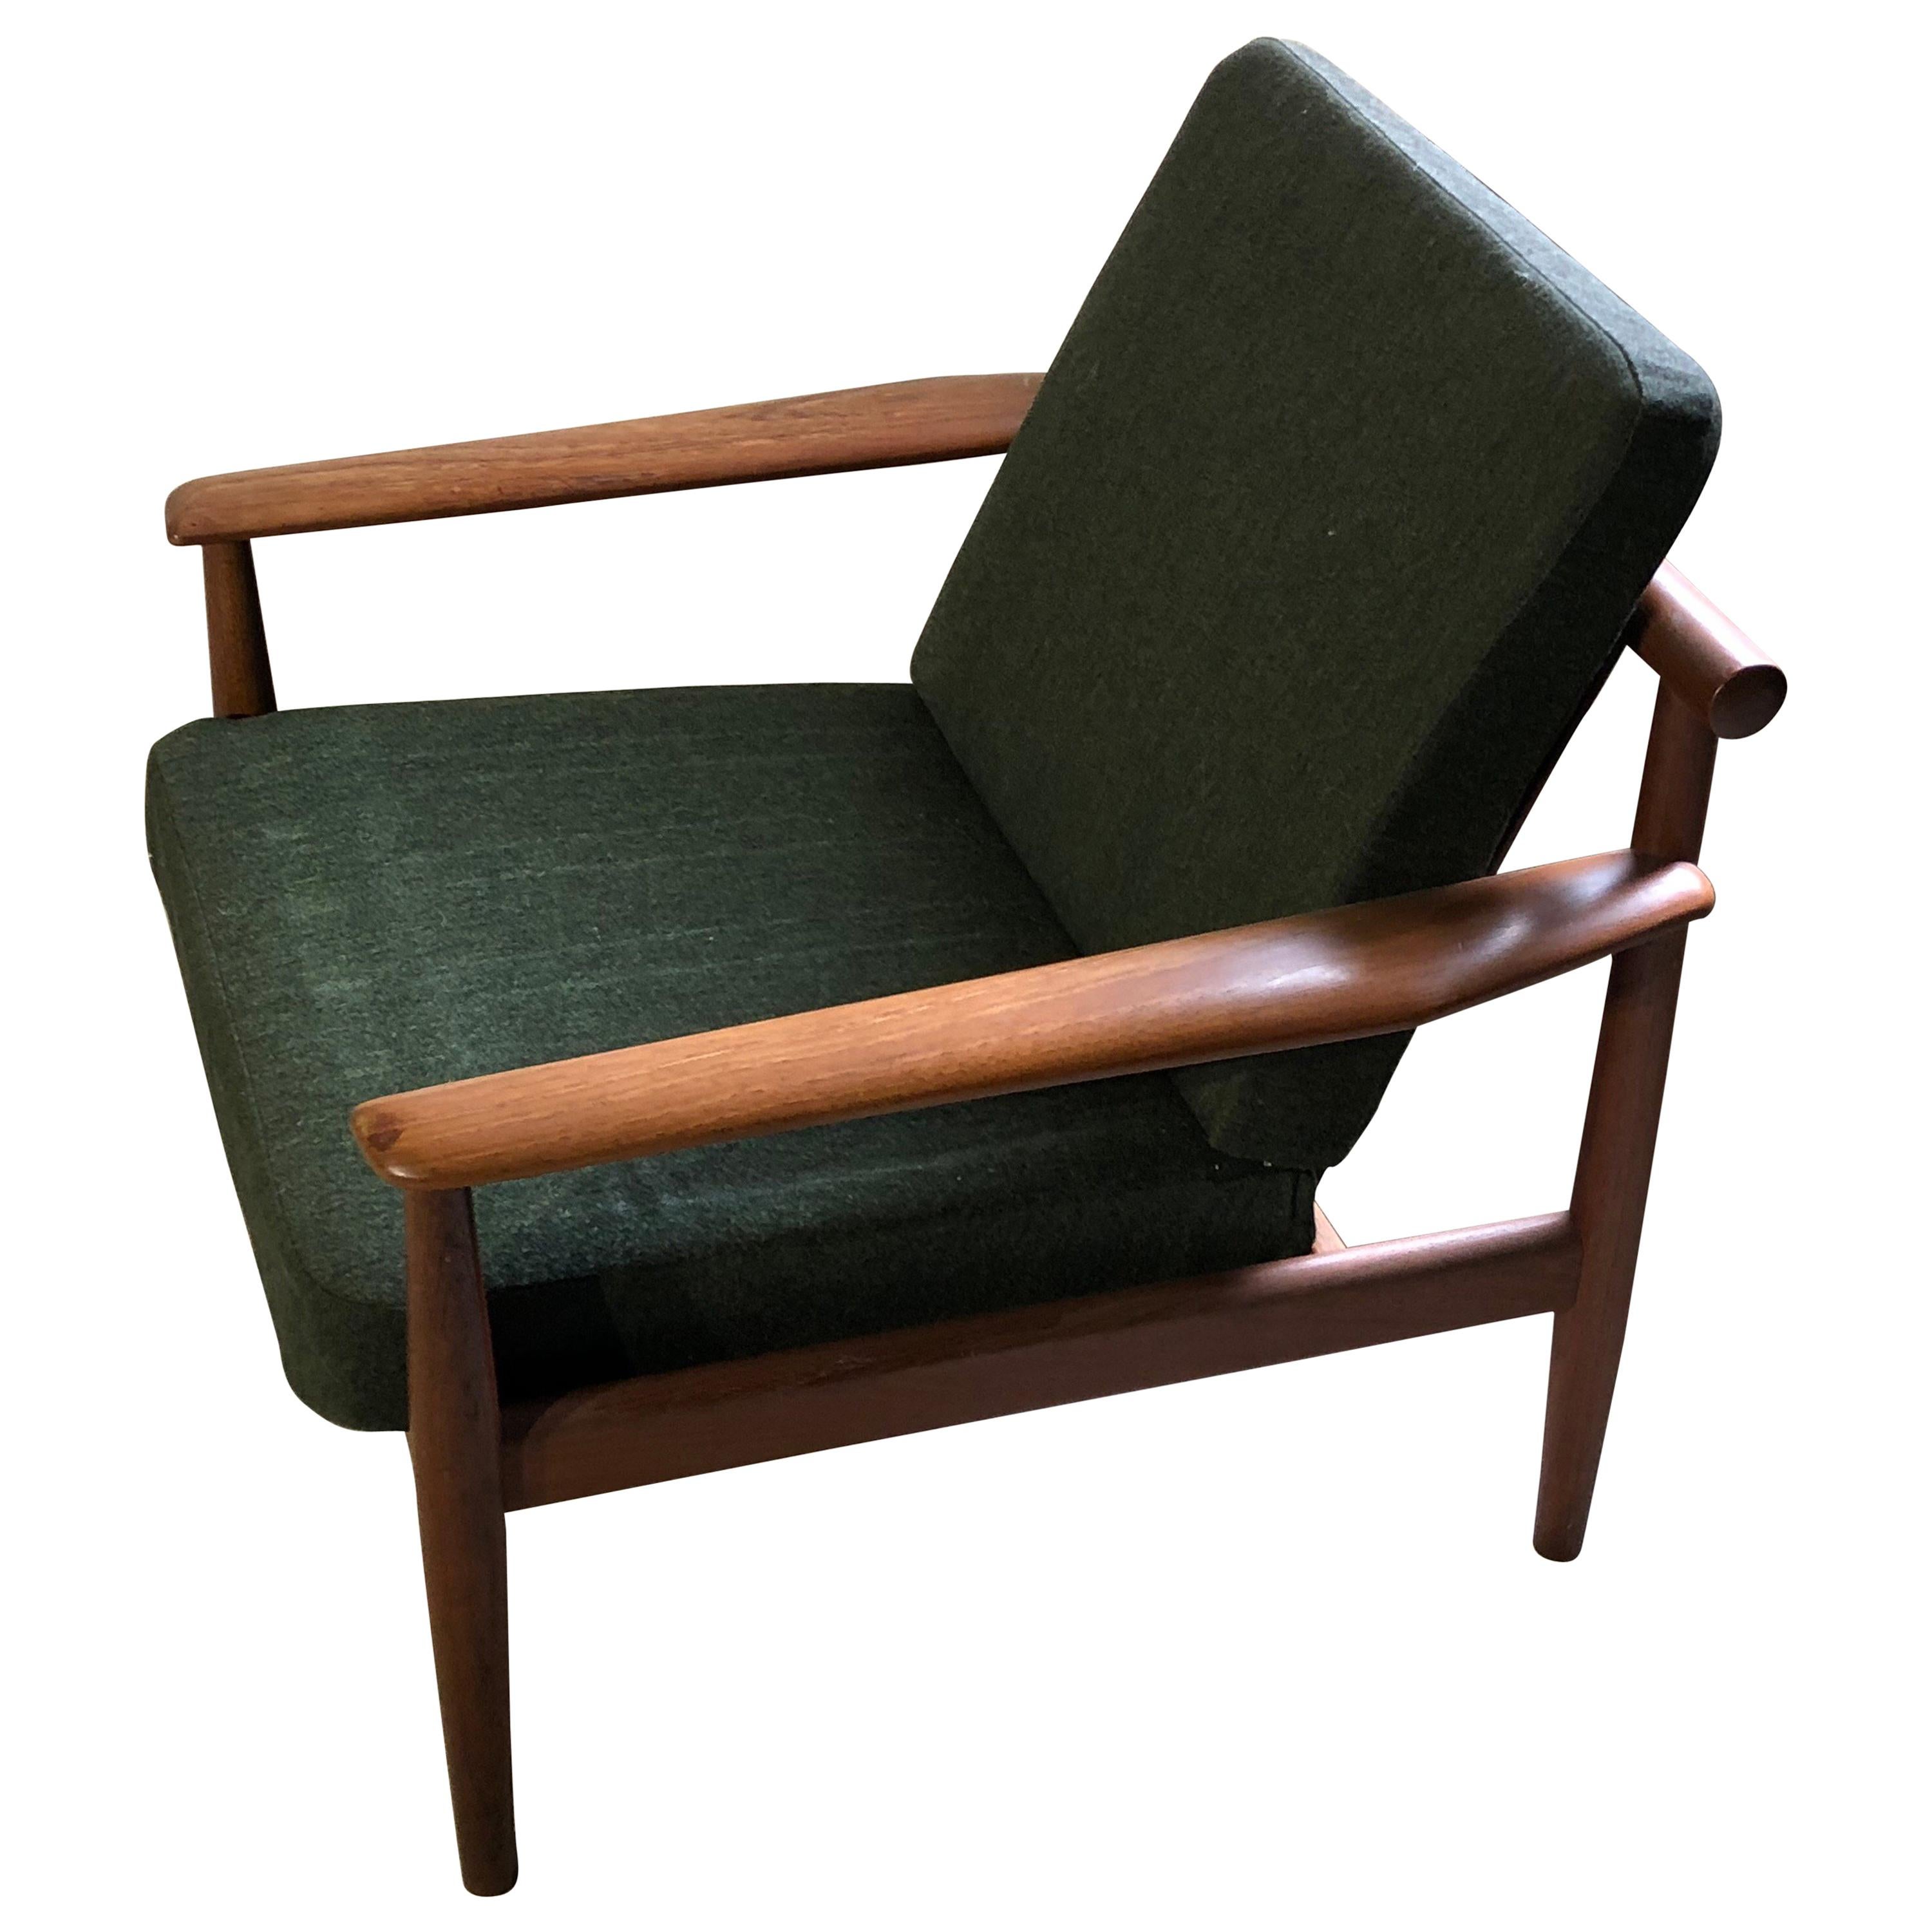 Rare Teak Lounge Chair by Grete Jalk, 1950s Danish Mid-Century Modern For Sale